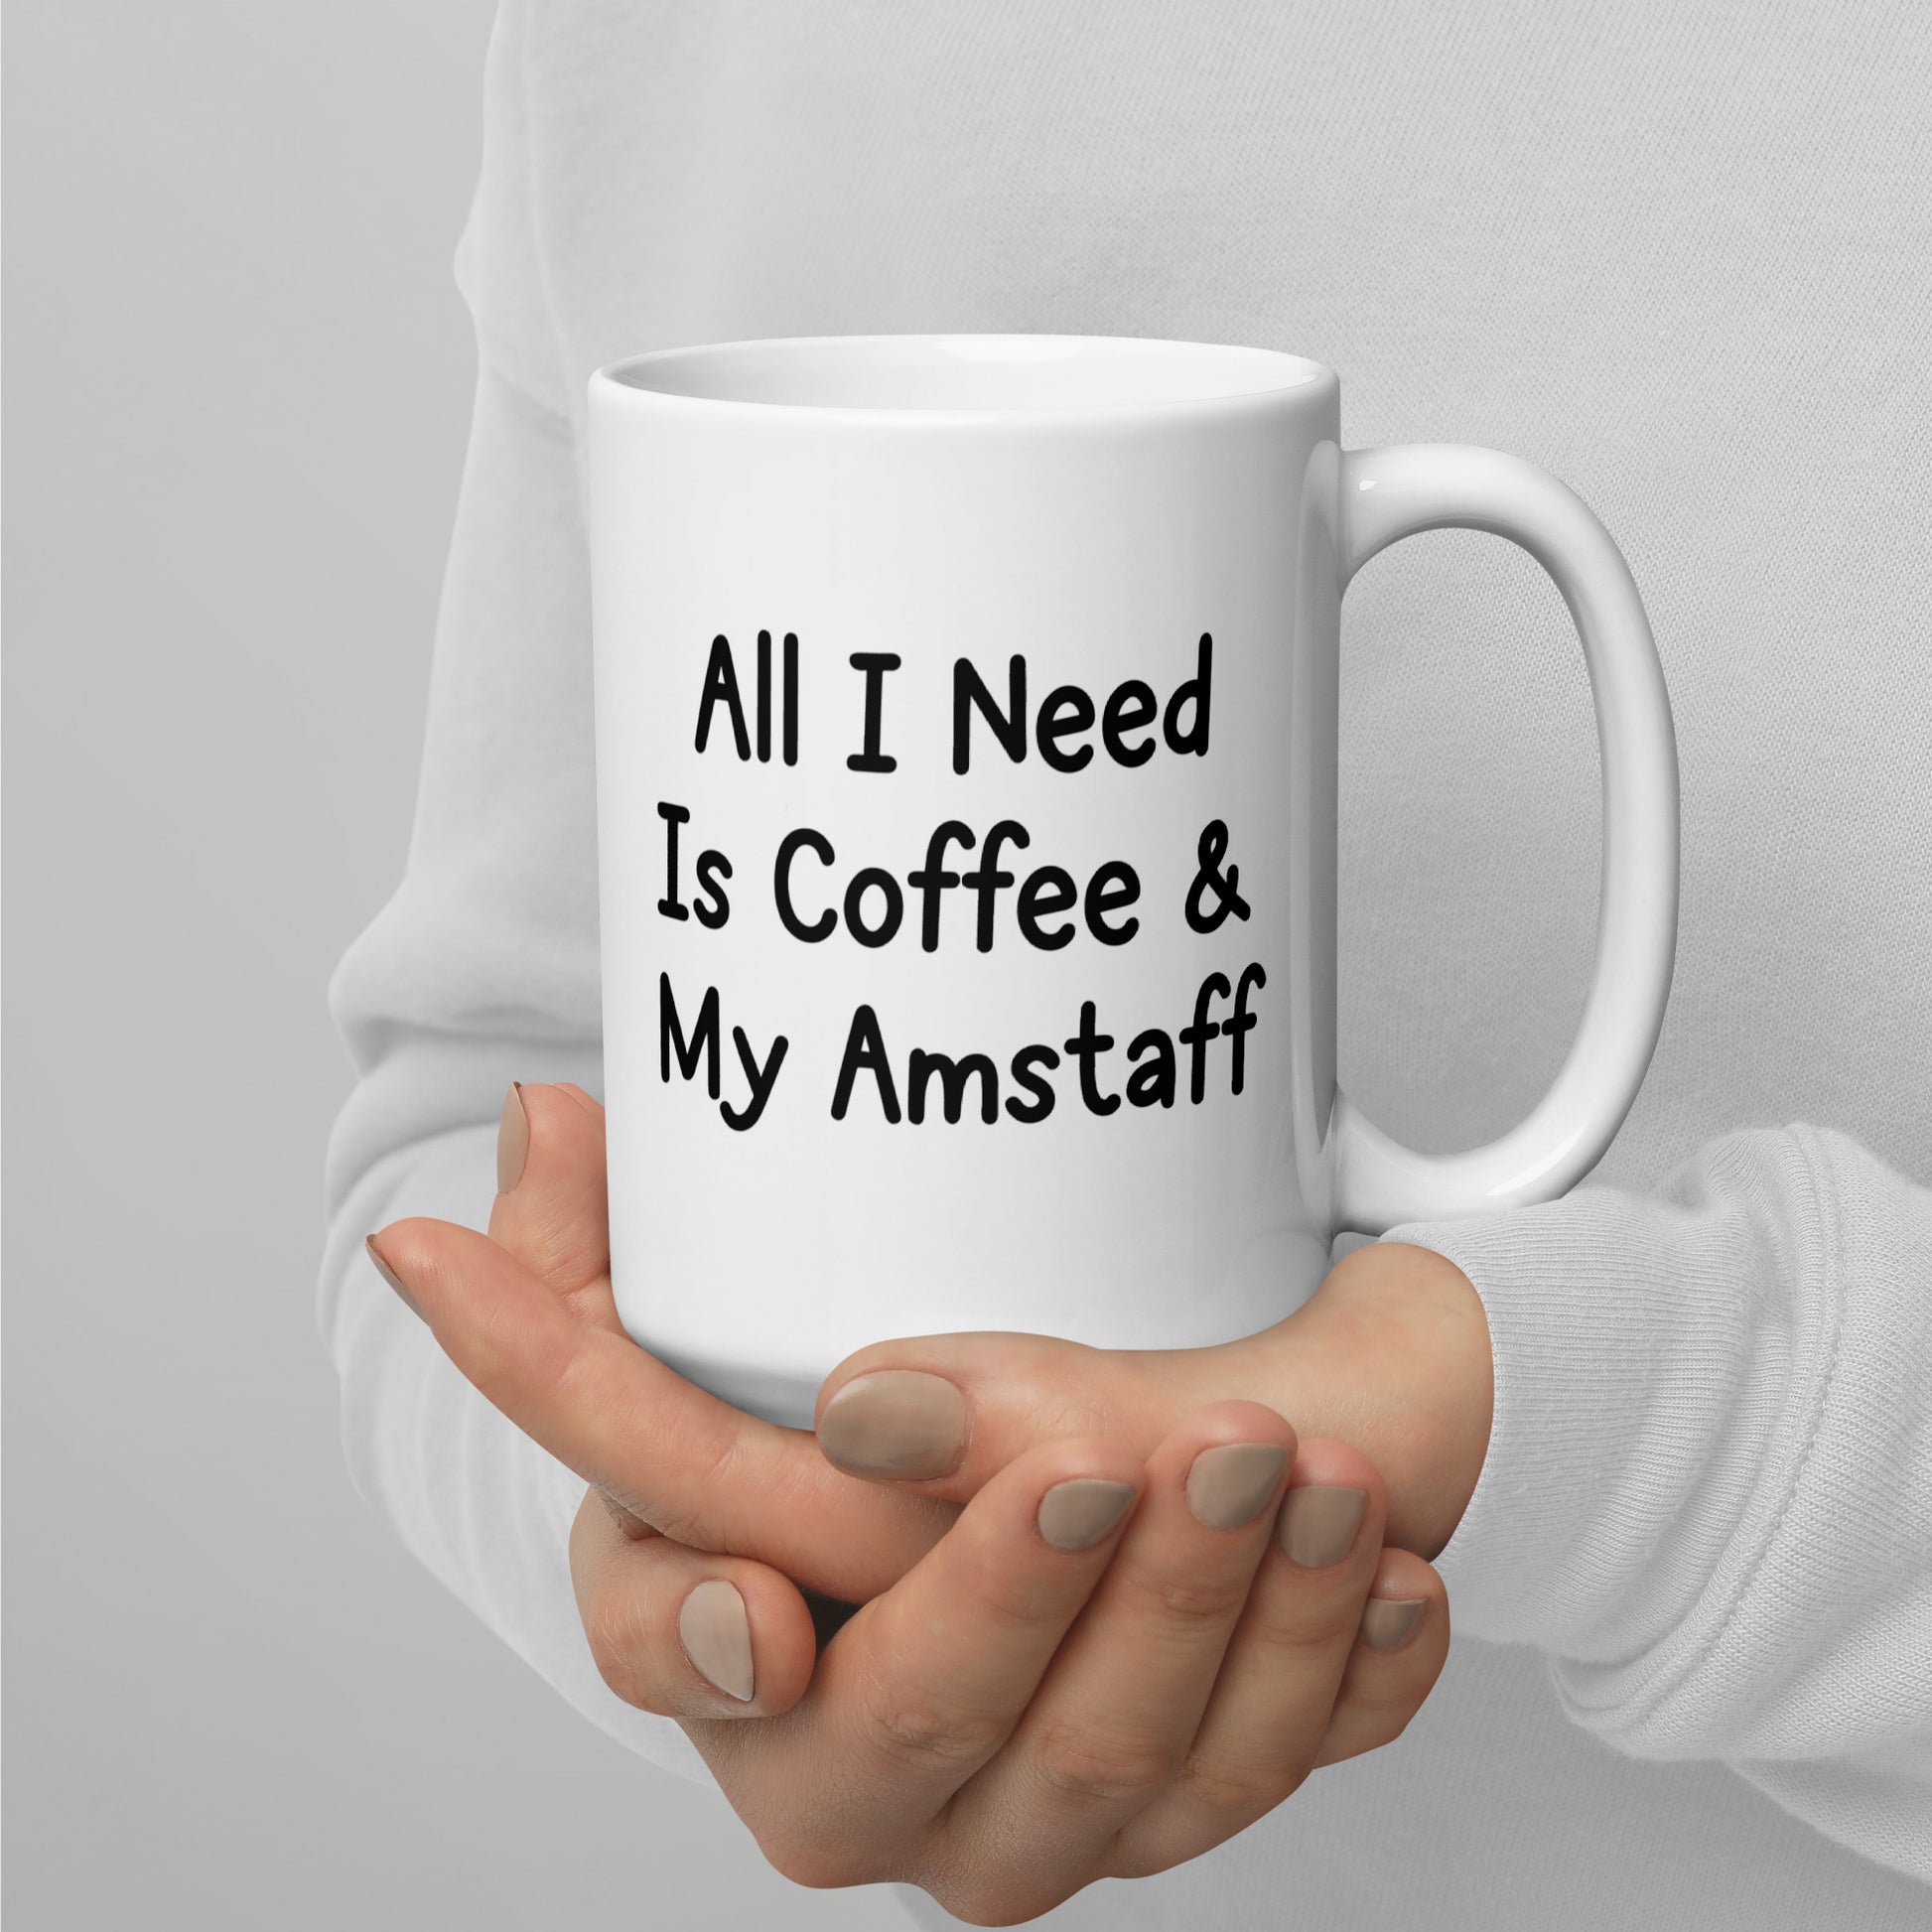 All I need is coffee & my Amstaff mug by Dog Artistry.